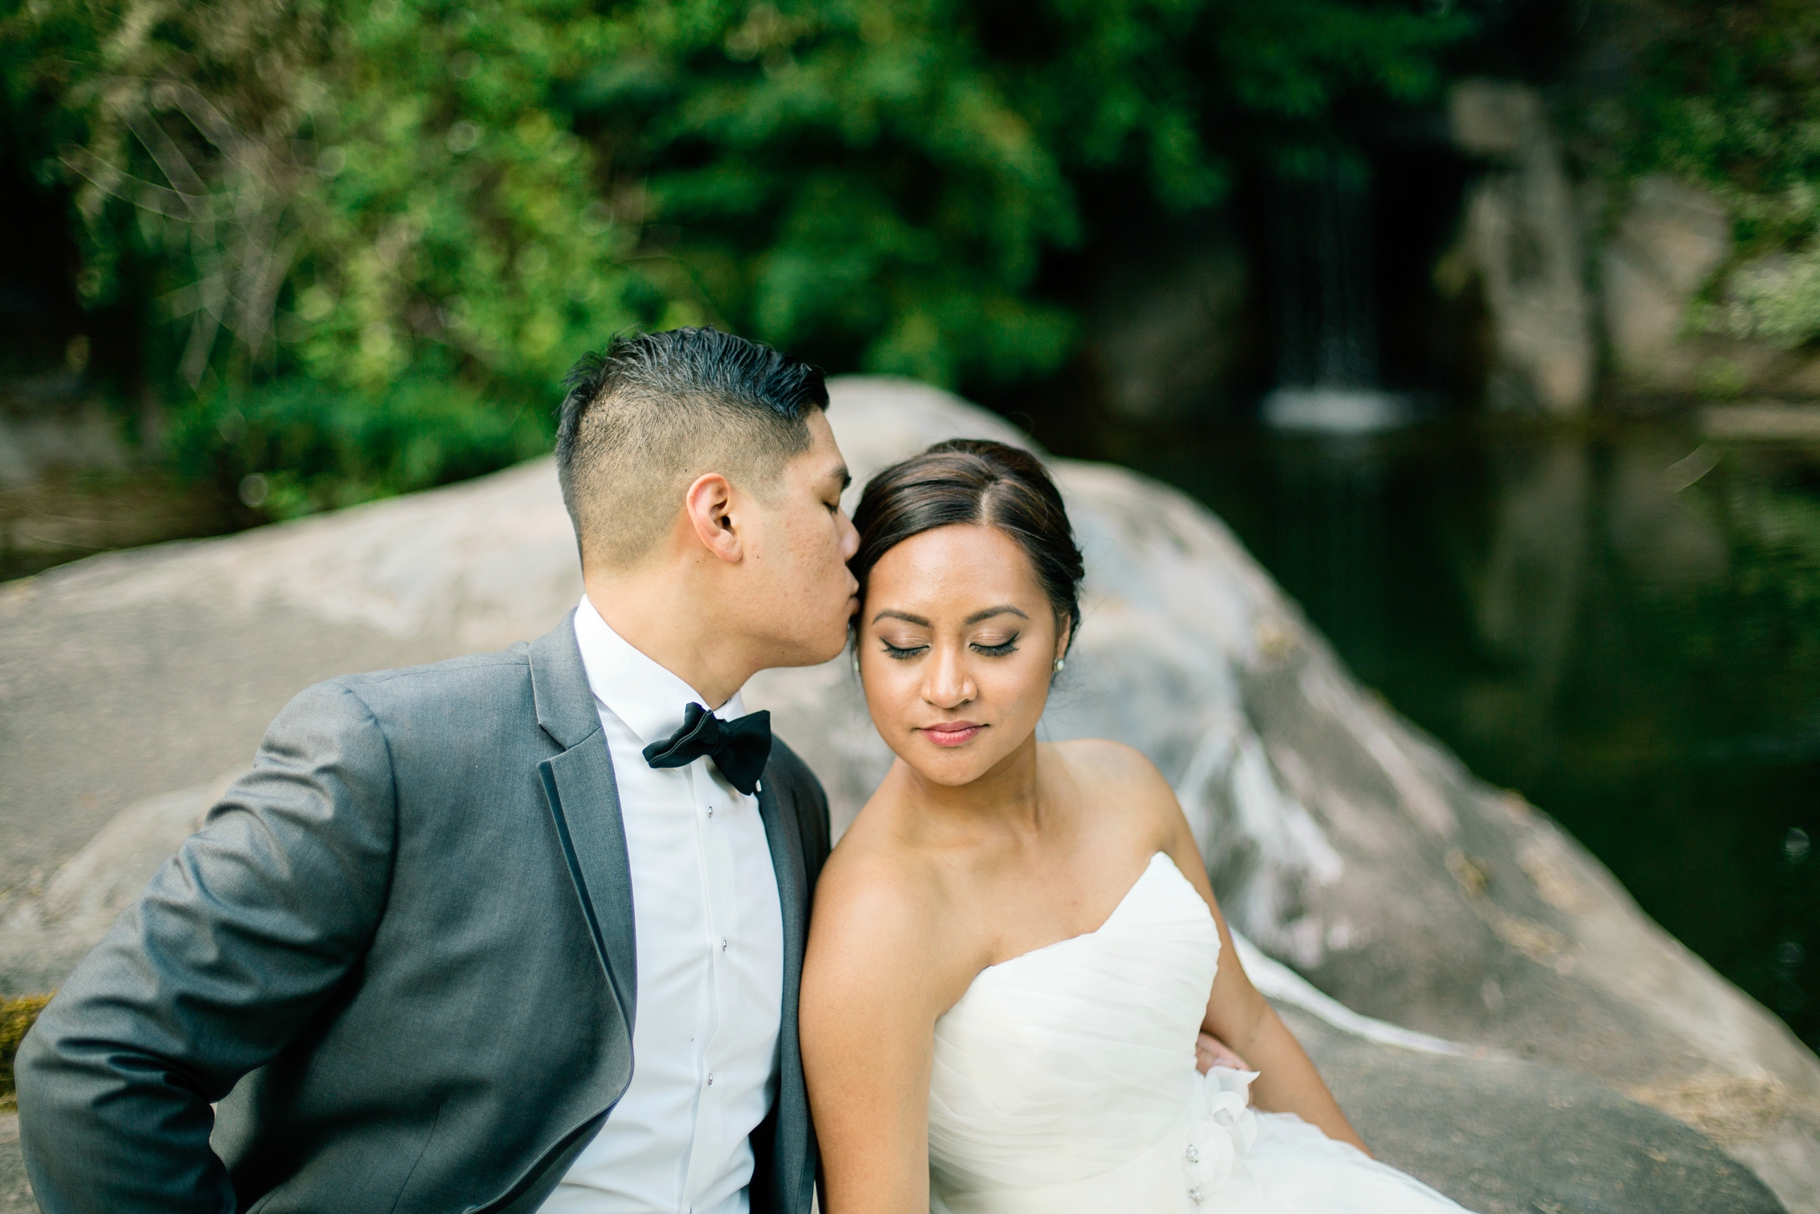 50-Waterfall-Bride-Groom-Wedding-Day-Portraits-Photographer-Rock-Creek-Gardens-Seattle-Wedding-Photography-by-Betty-Elaine